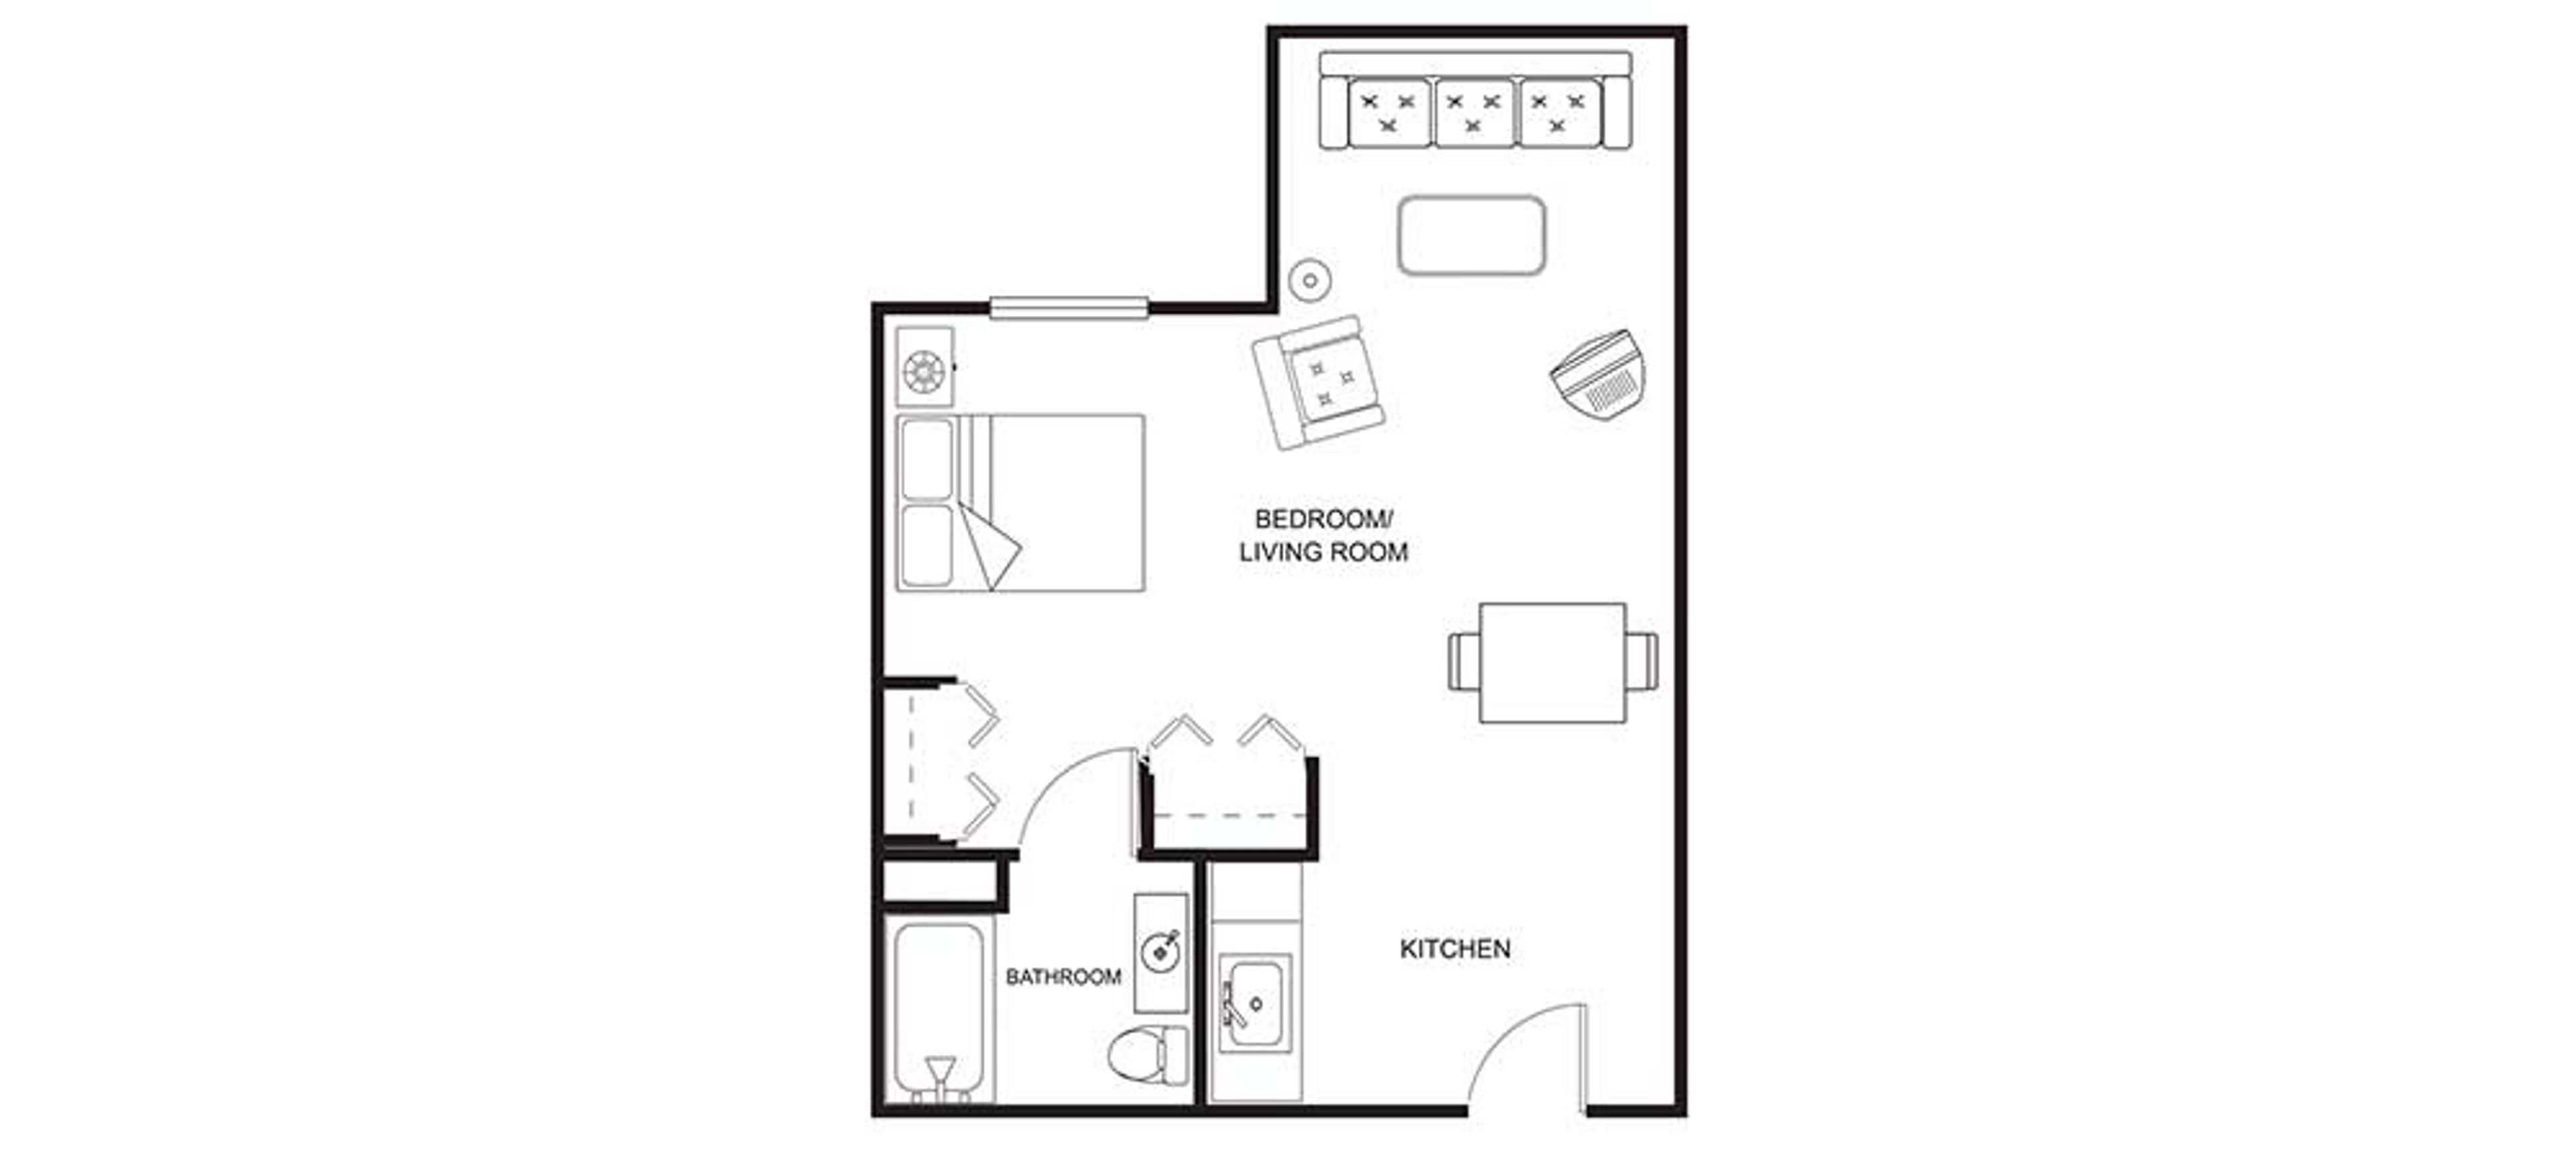 Floorplan - Bay Side Terrace - Studio S3 Assisted Living